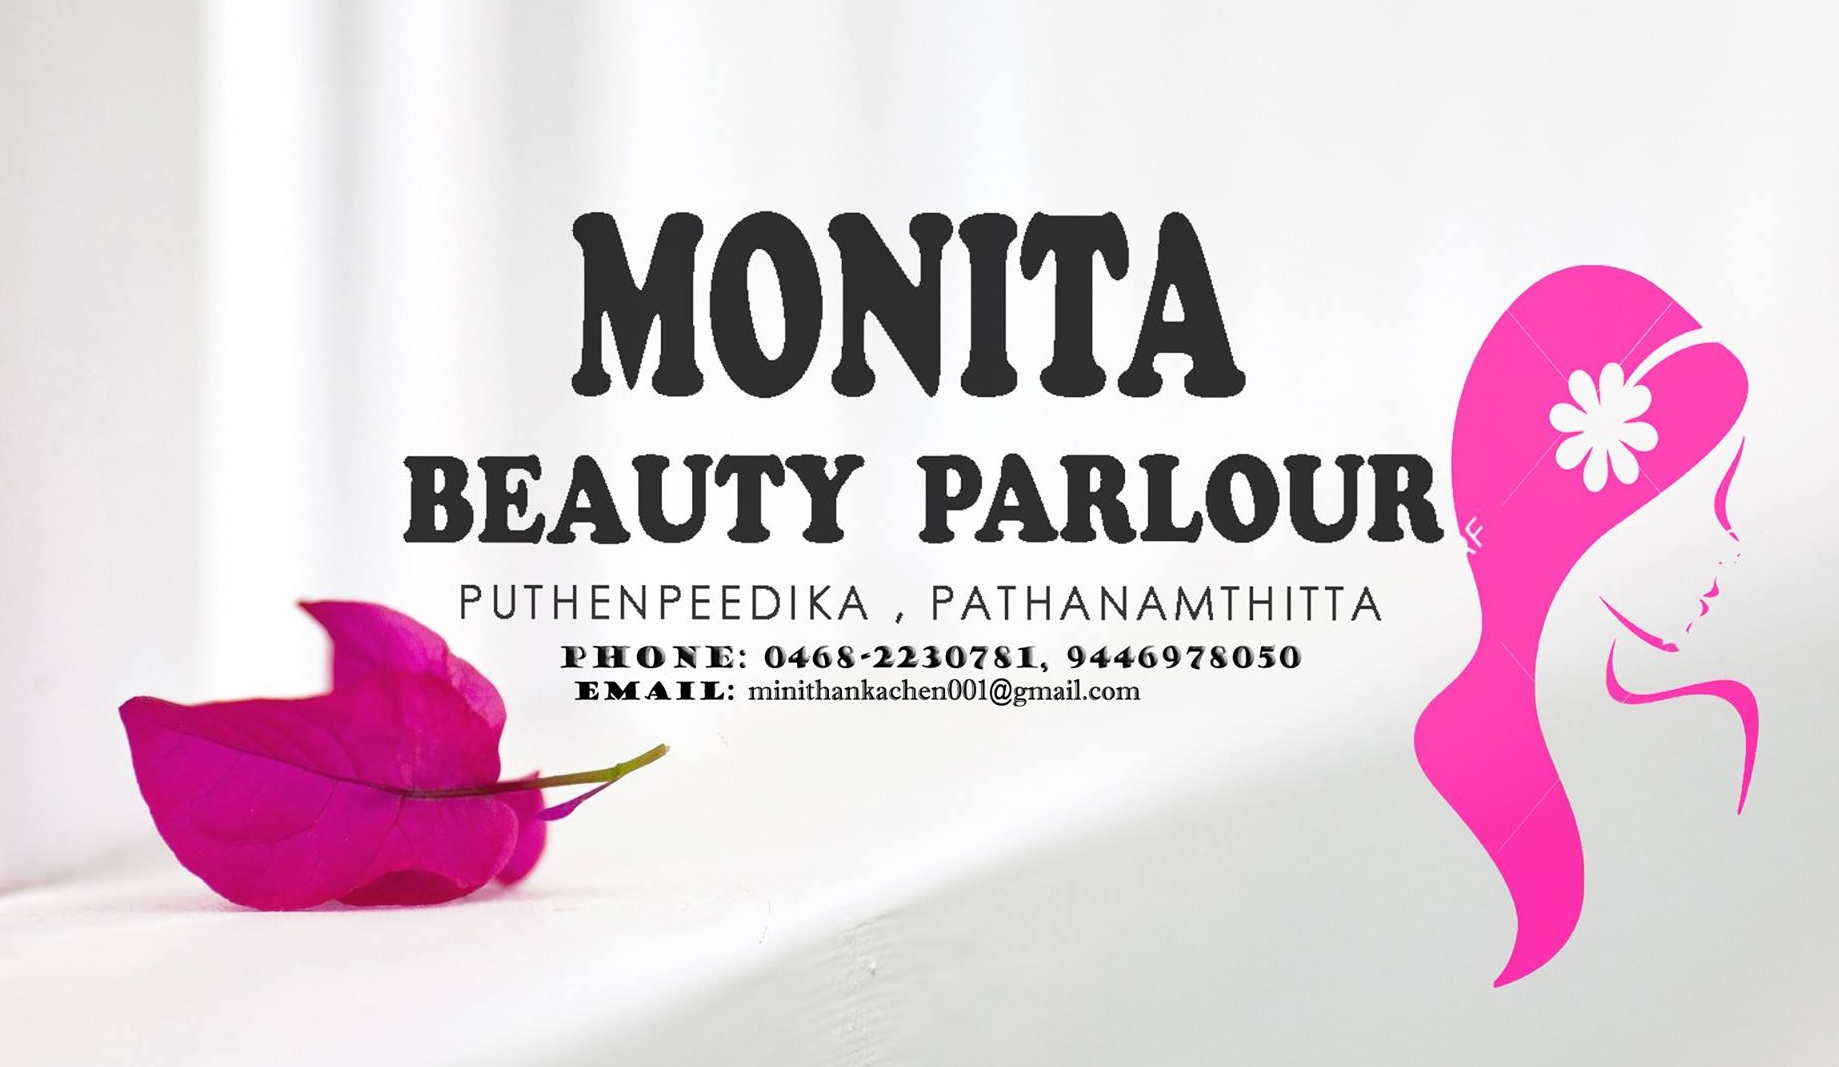 Monita Beauty Parlour, BEAUTY PARLOUR,  service in Pathanamthitta, Pathanamthitta